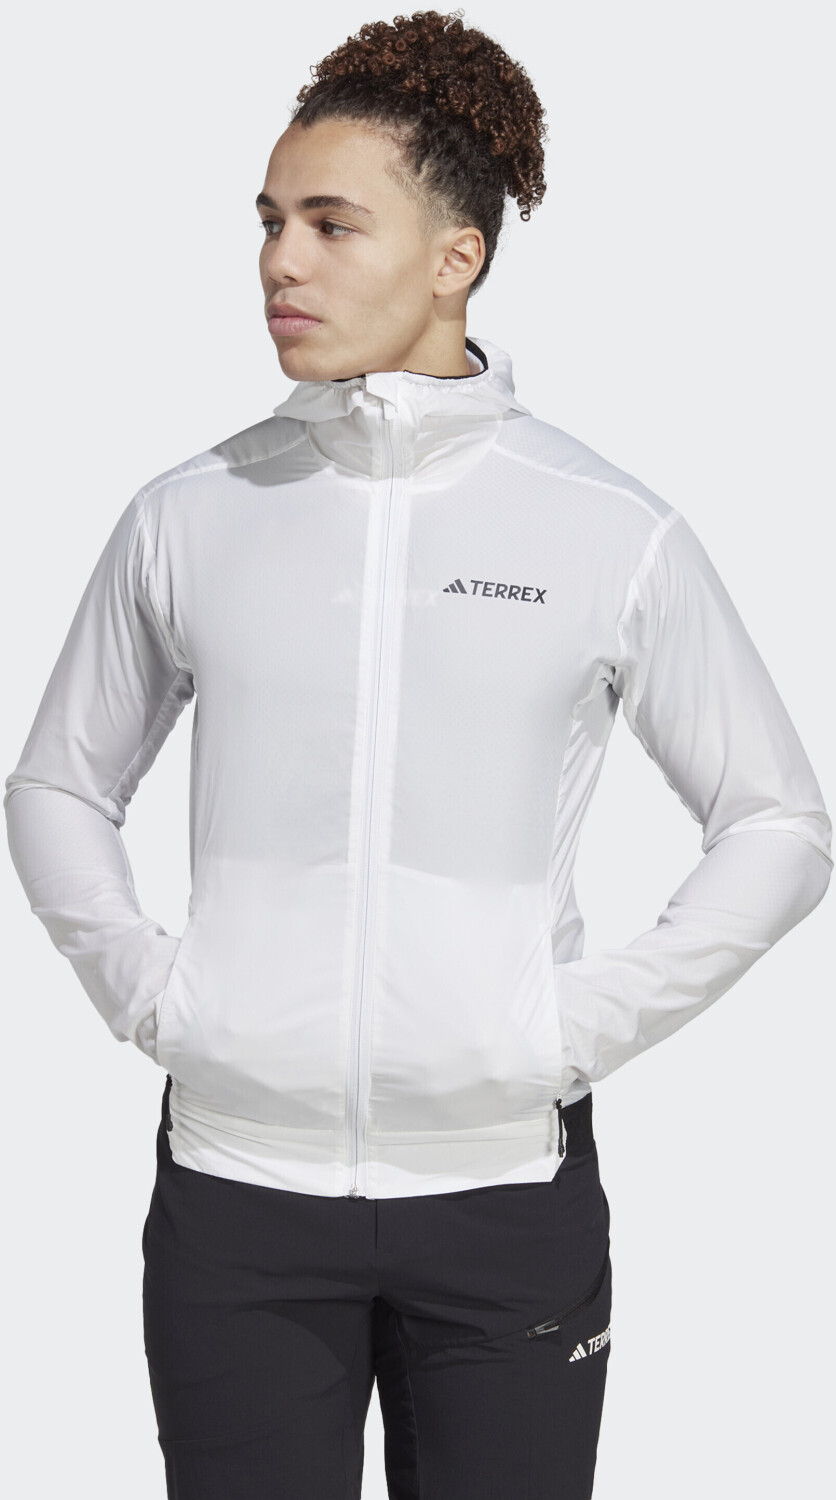 from £42.50 Windweave Wind Deals Xperior – Adidas Man on Jacket (Today) Best TERREX Buy